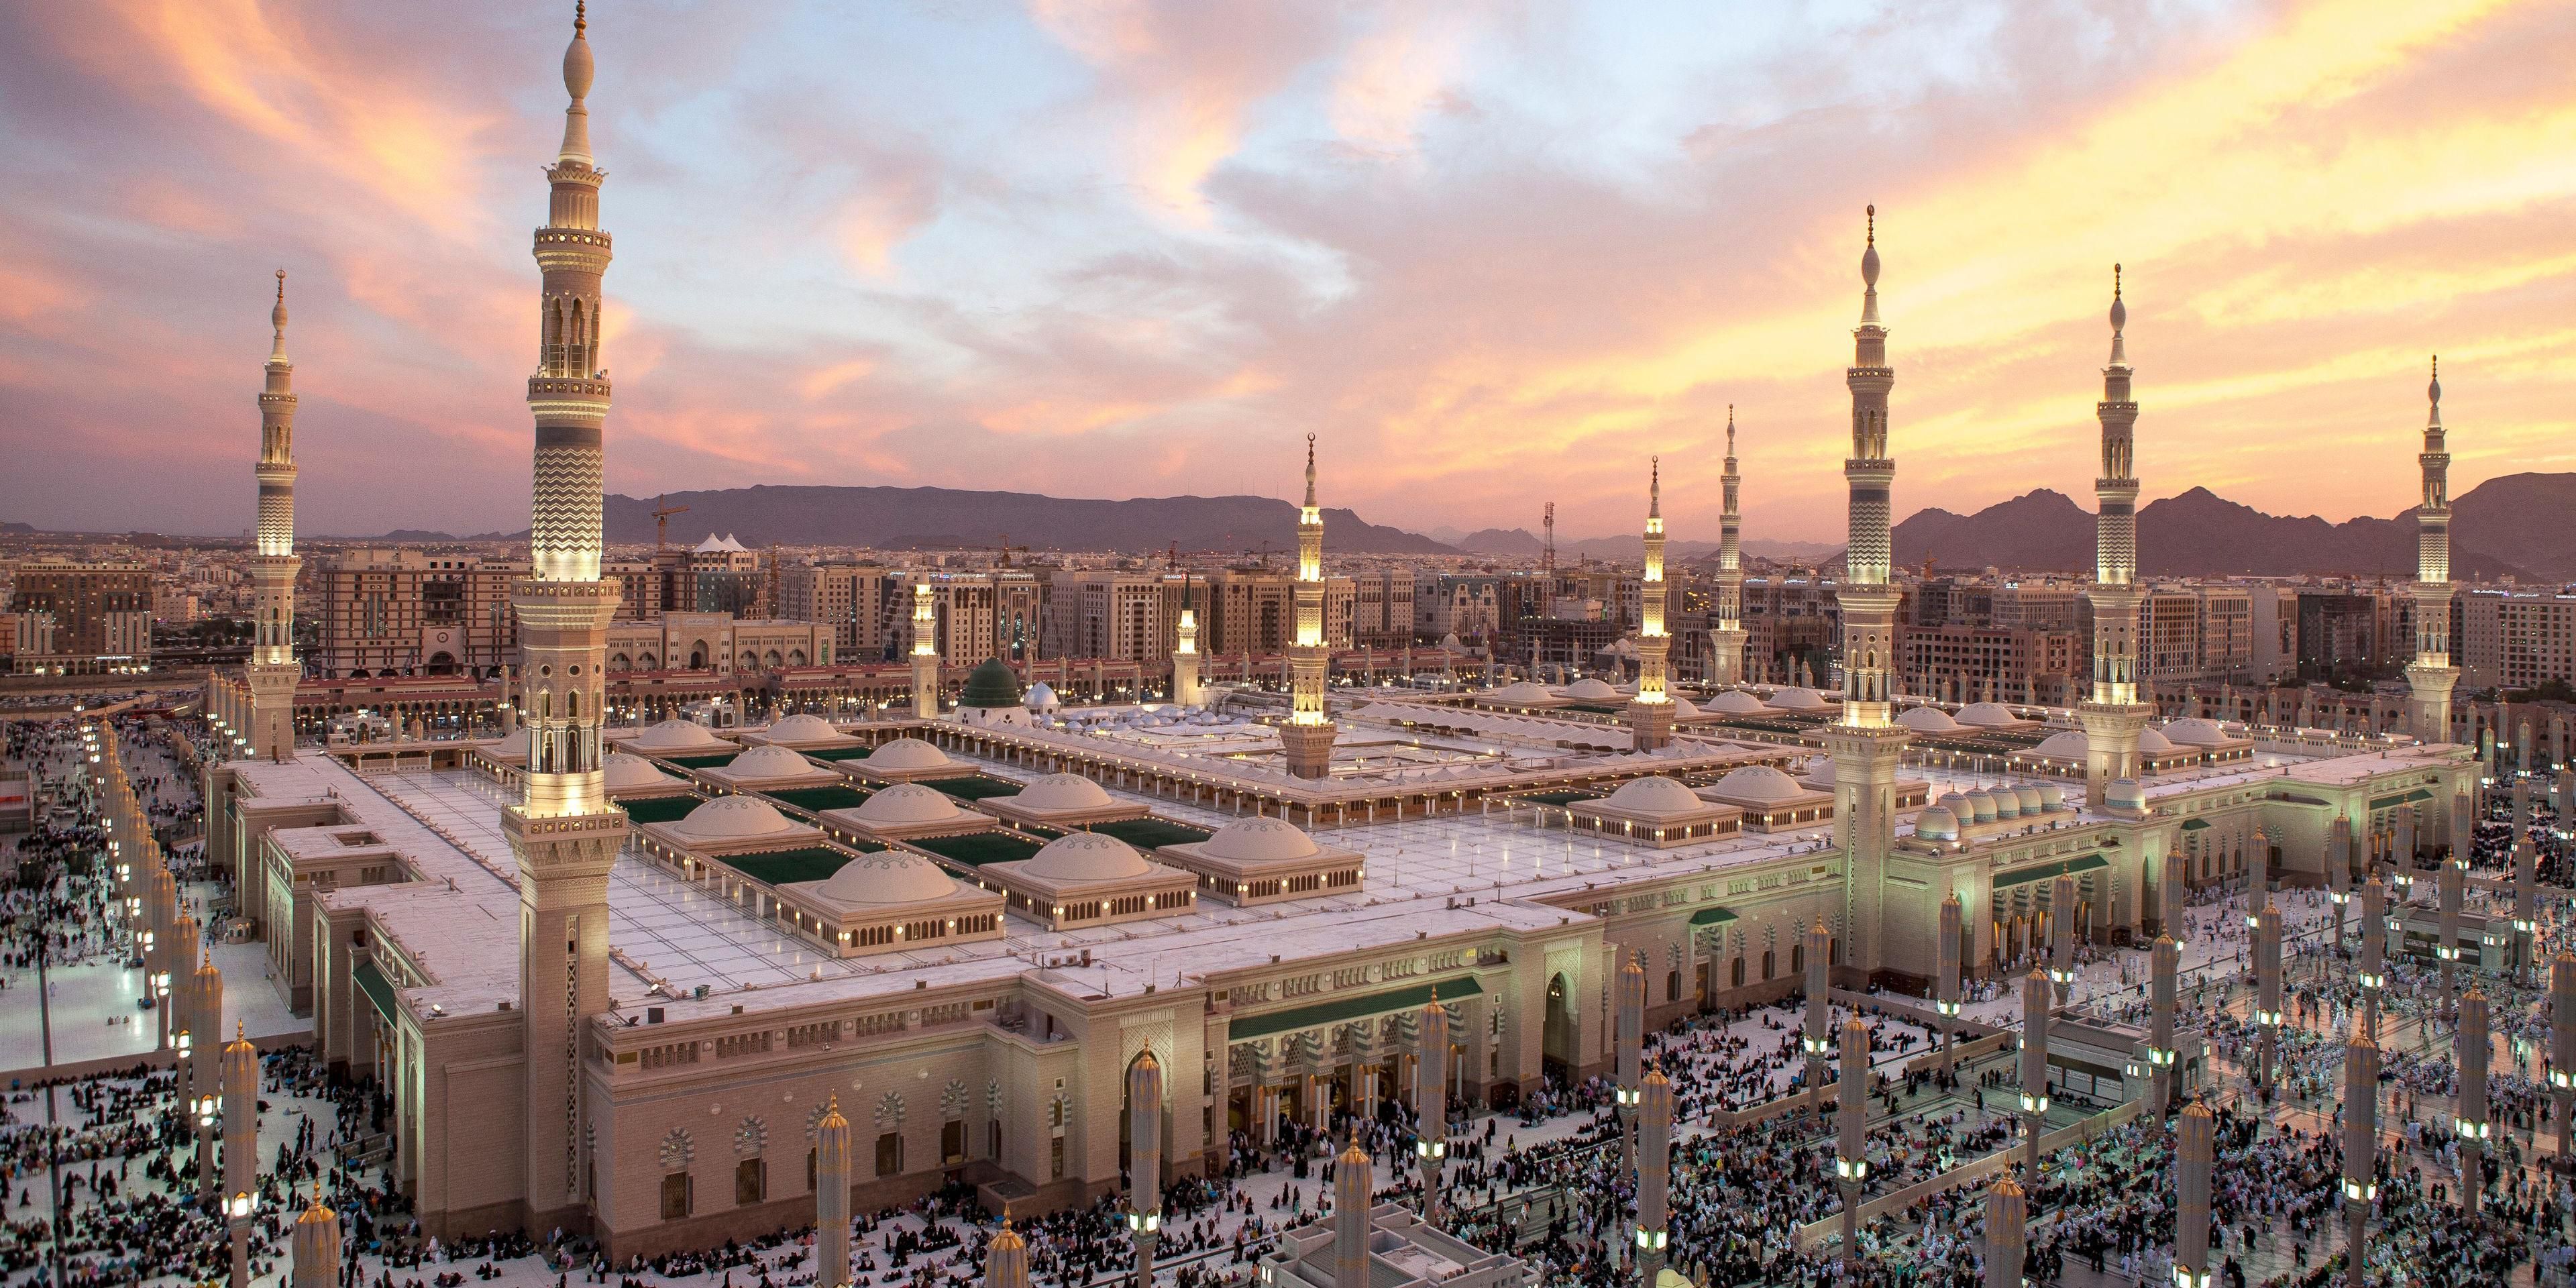 Медина что это. Медина мечеть пророка. Мечеть пророка (Масджид АН-Набави). Медина мечеть пророка Мухаммеда. Масджид АН-Набави Медина Саудовская Аравия.